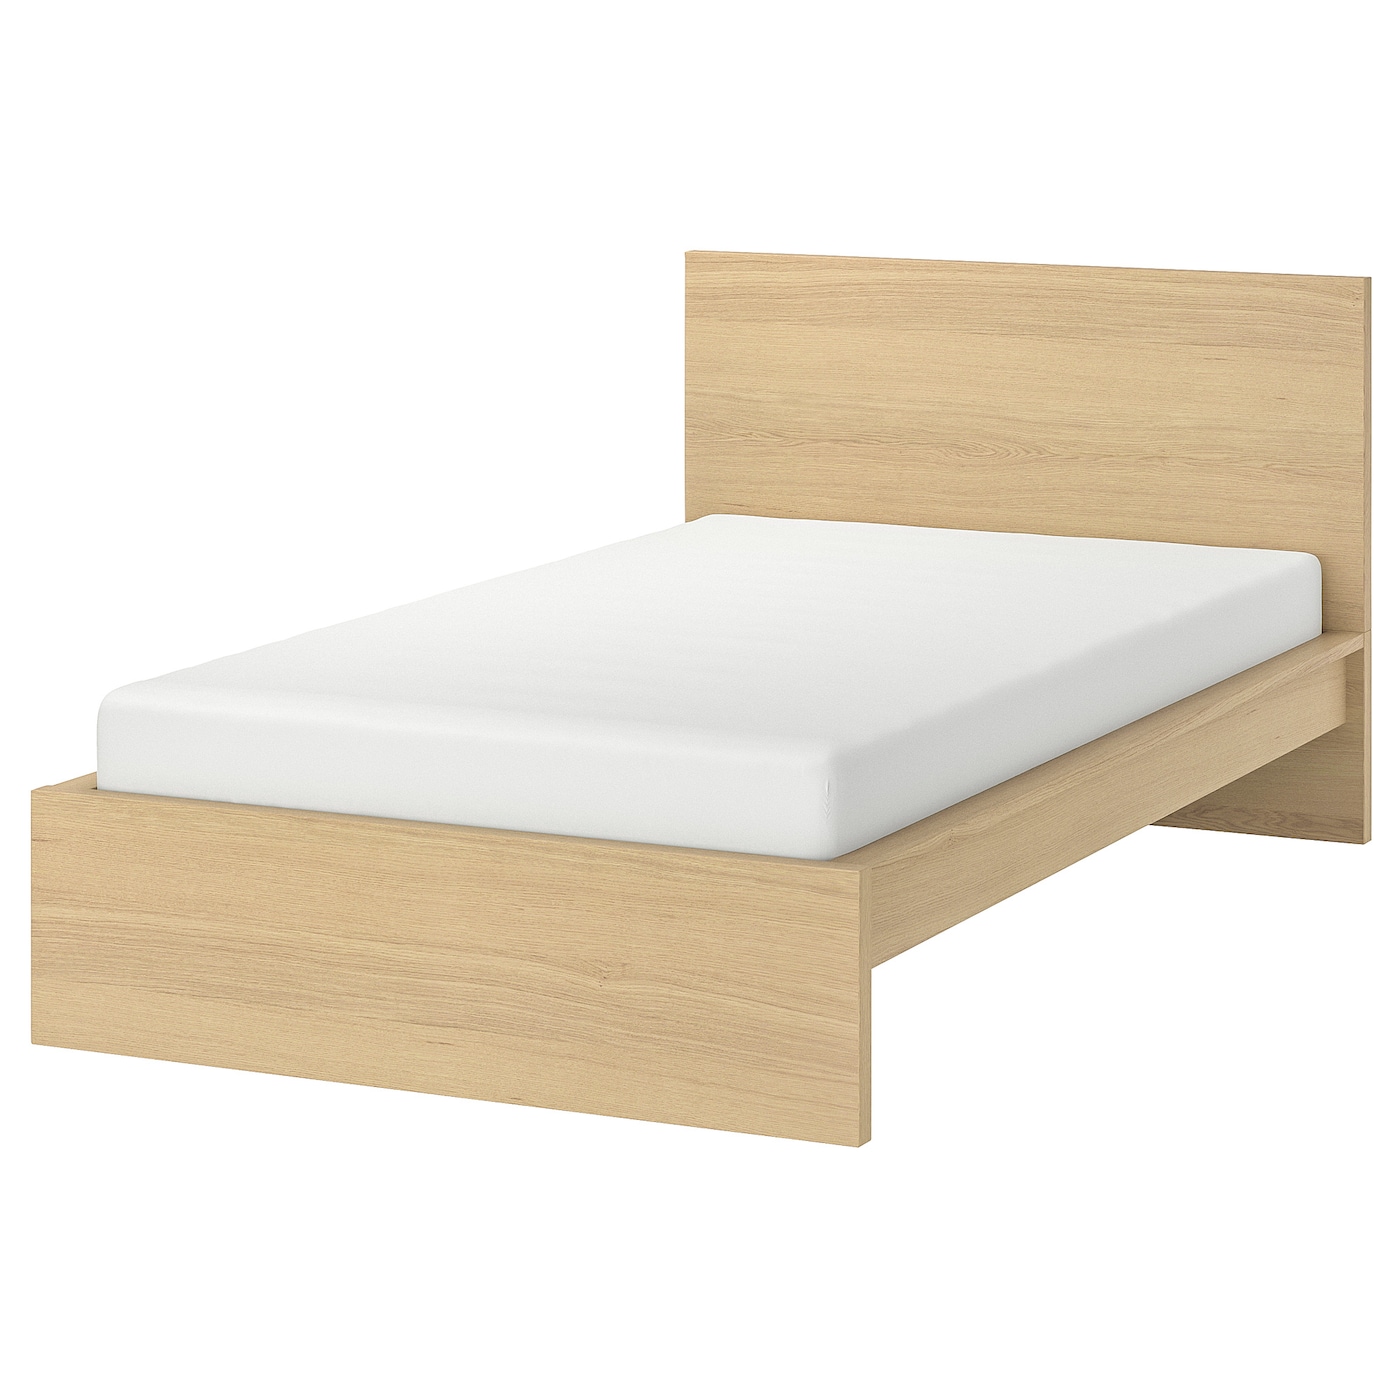 Каркас кровати - IKEA MALM, 200х120 см, под беленый дуб, МАЛЬМ ИКЕА